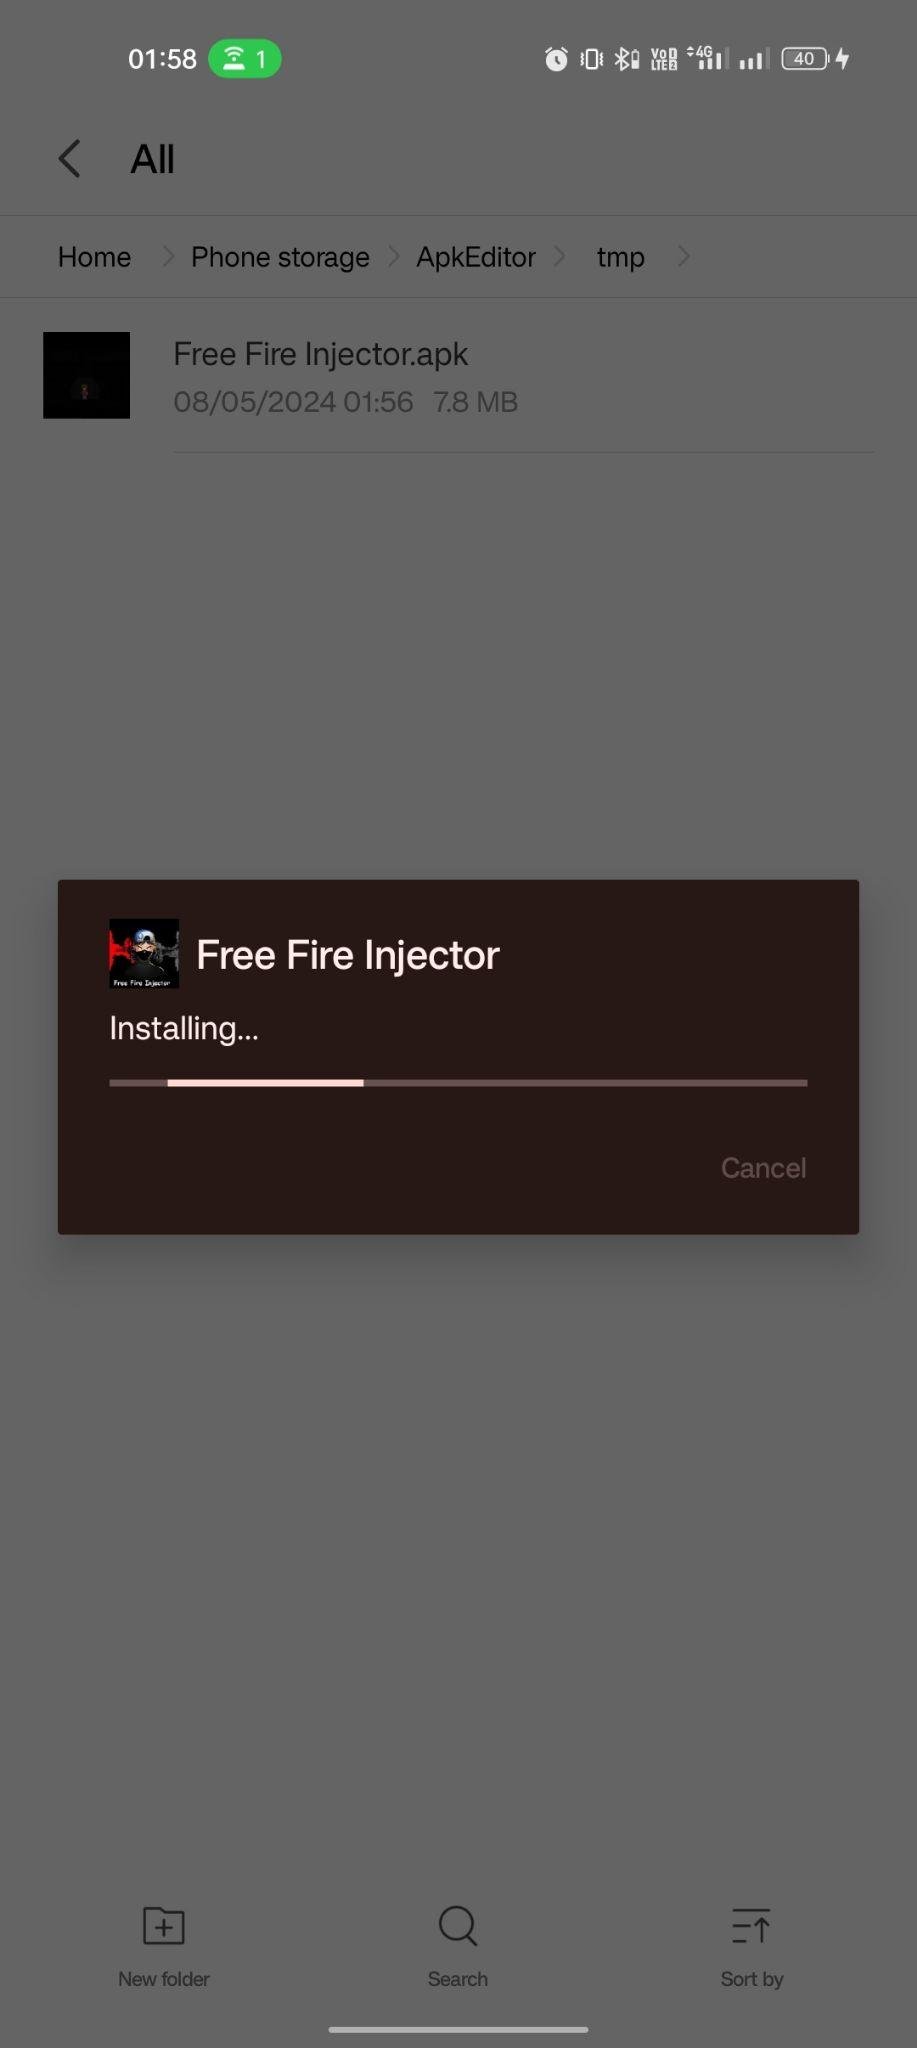 Free Fire Injector apk installing